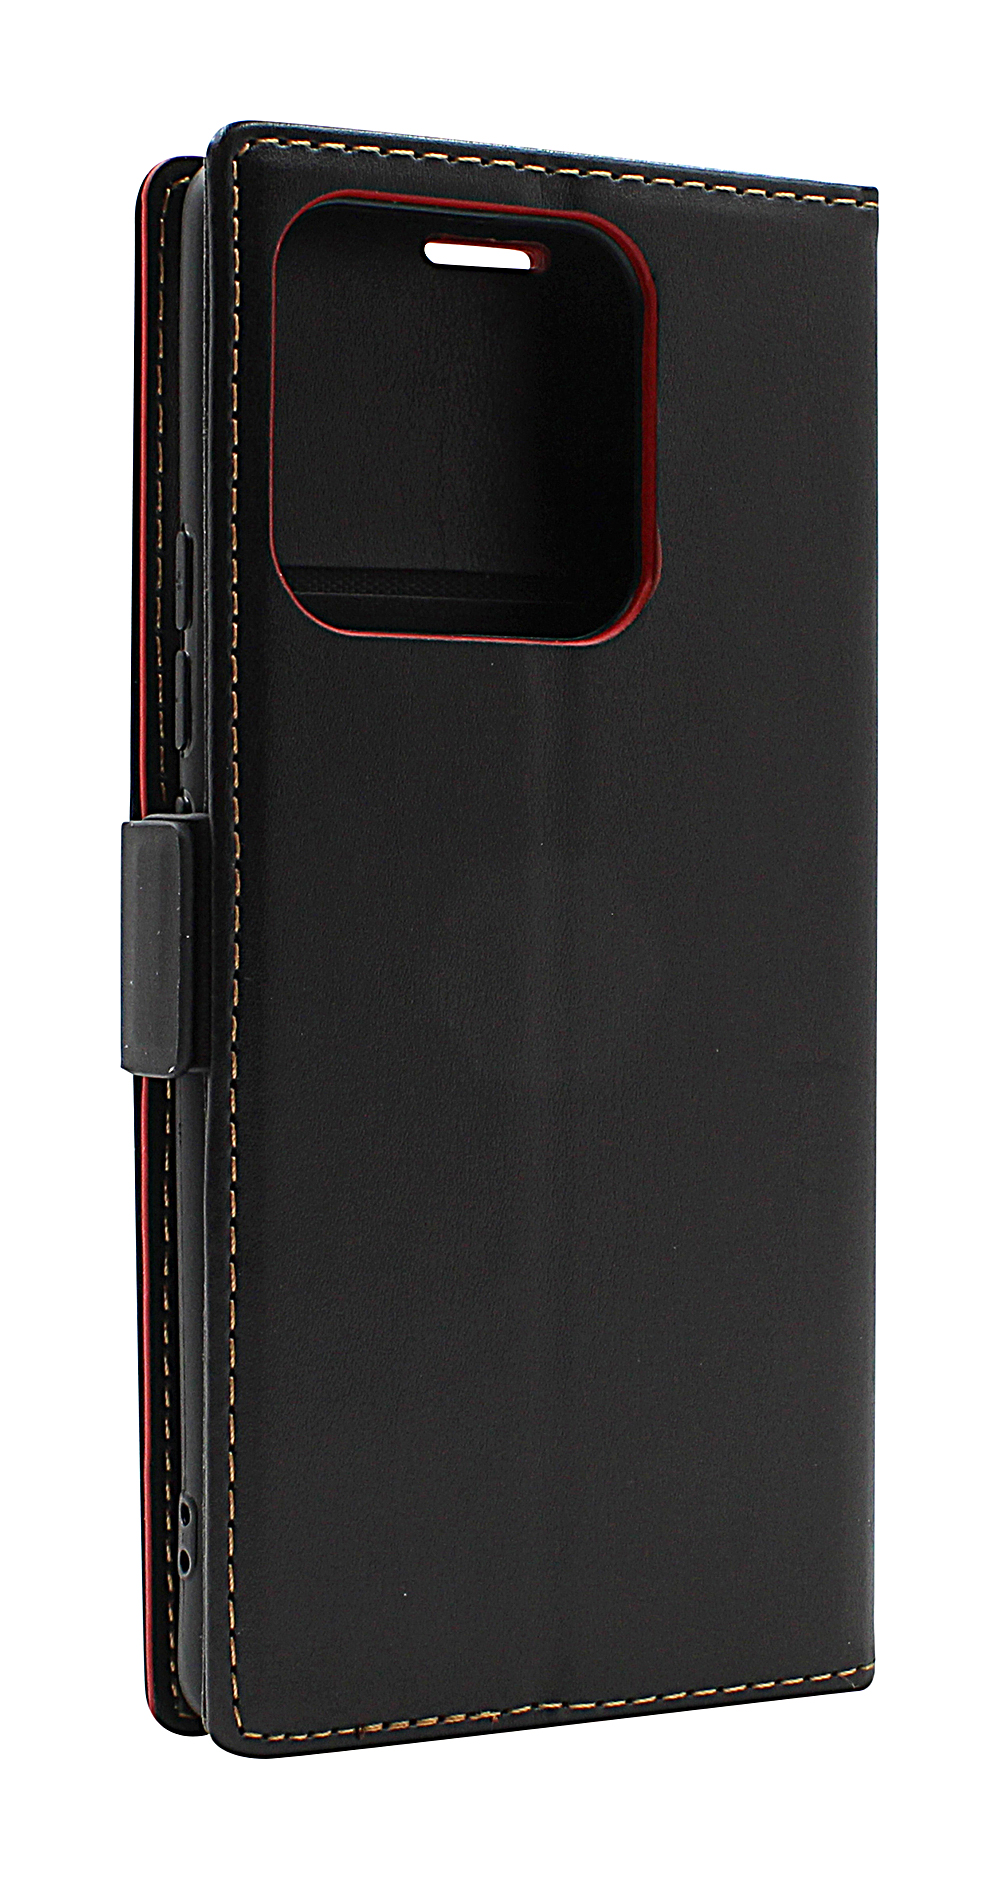 billigamobilskydd.seLyx Standcase Wallet Xiaomi 13 Pro 5G